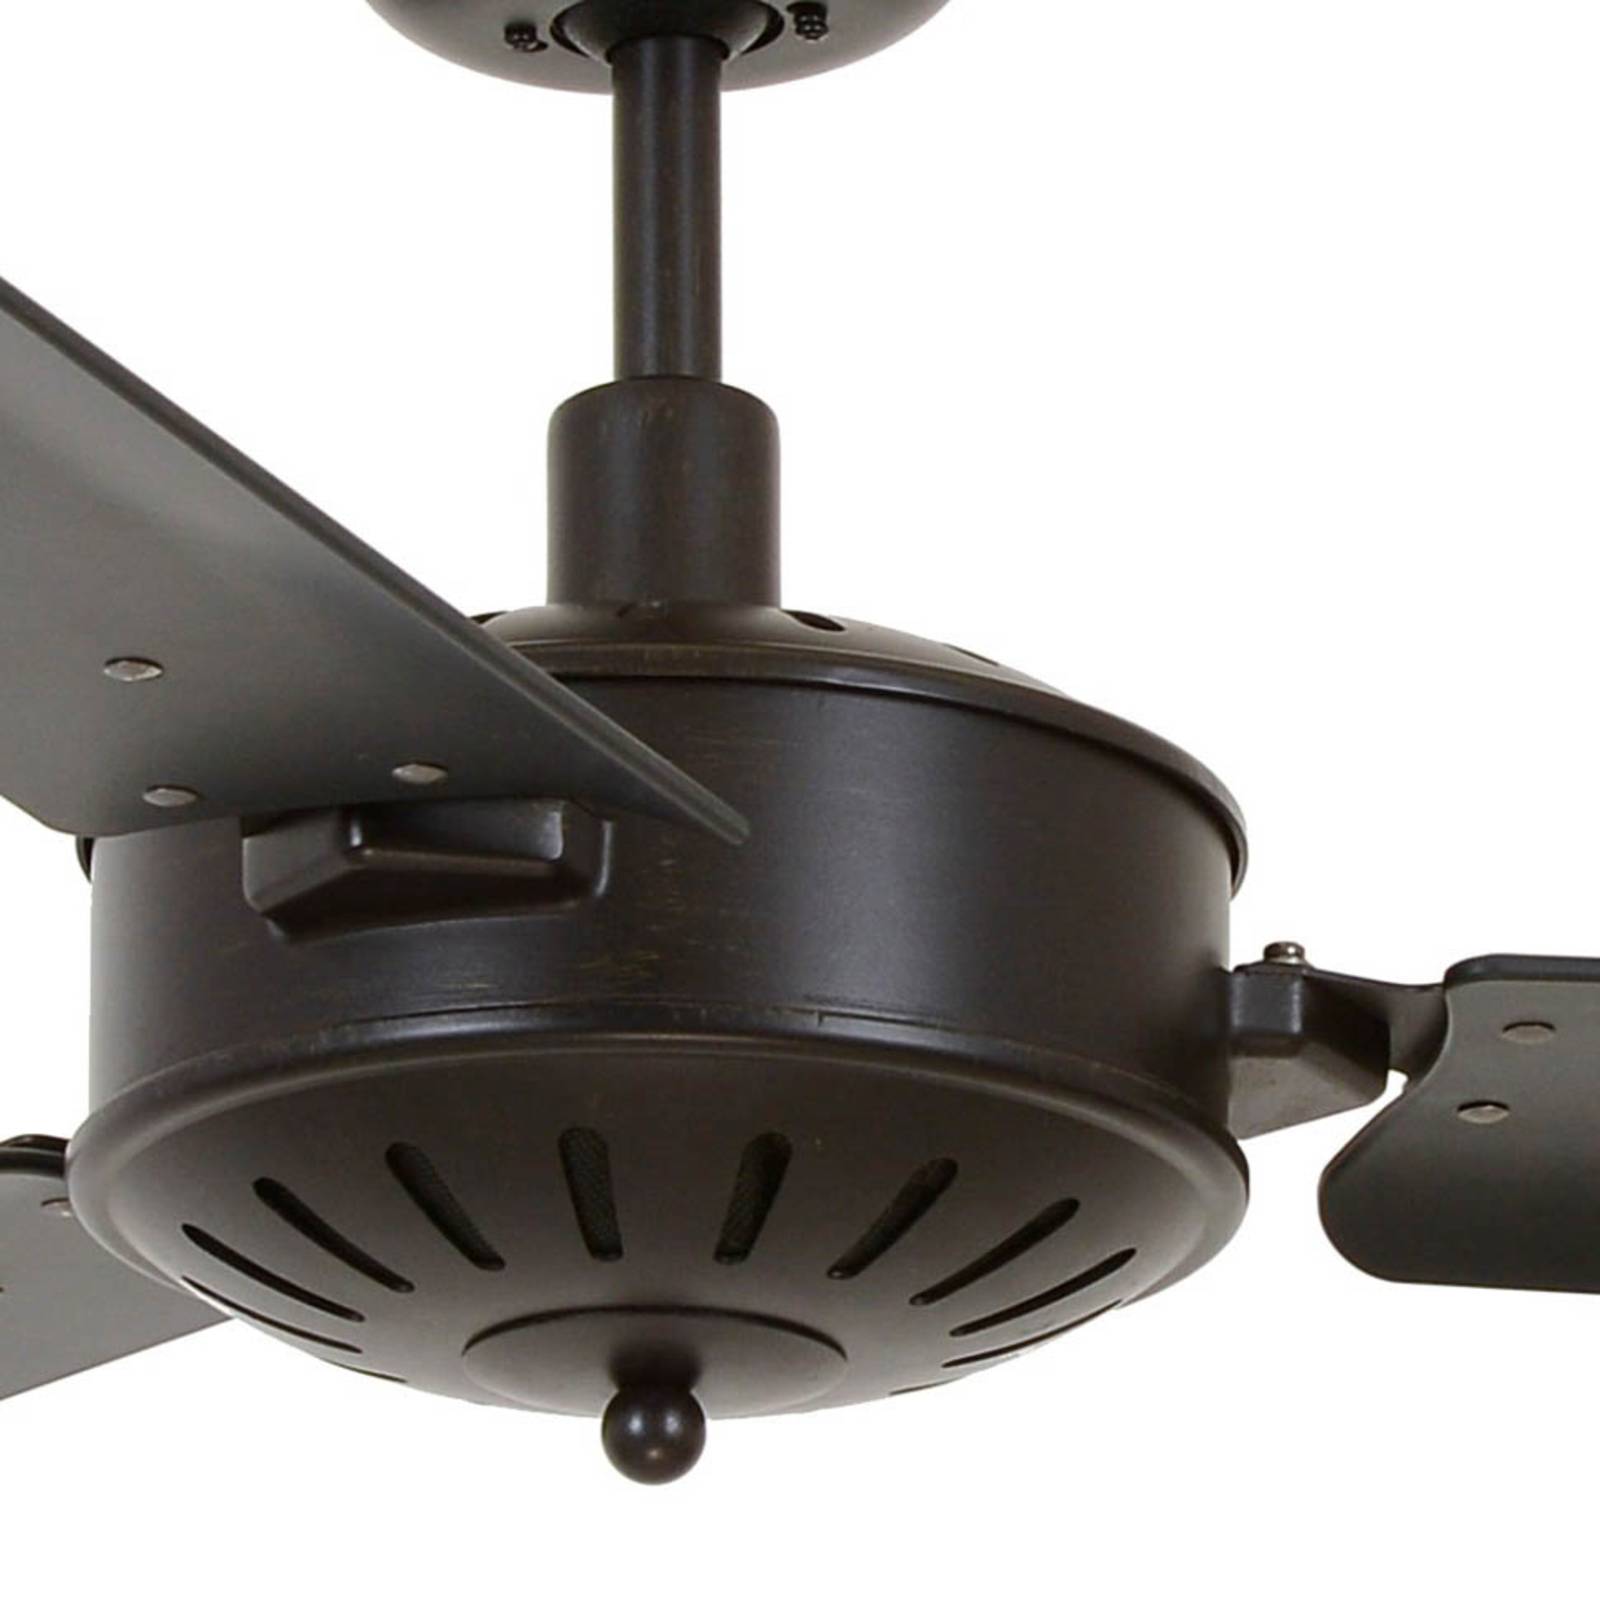 Airfusion Carolina ceiling fan, matt black